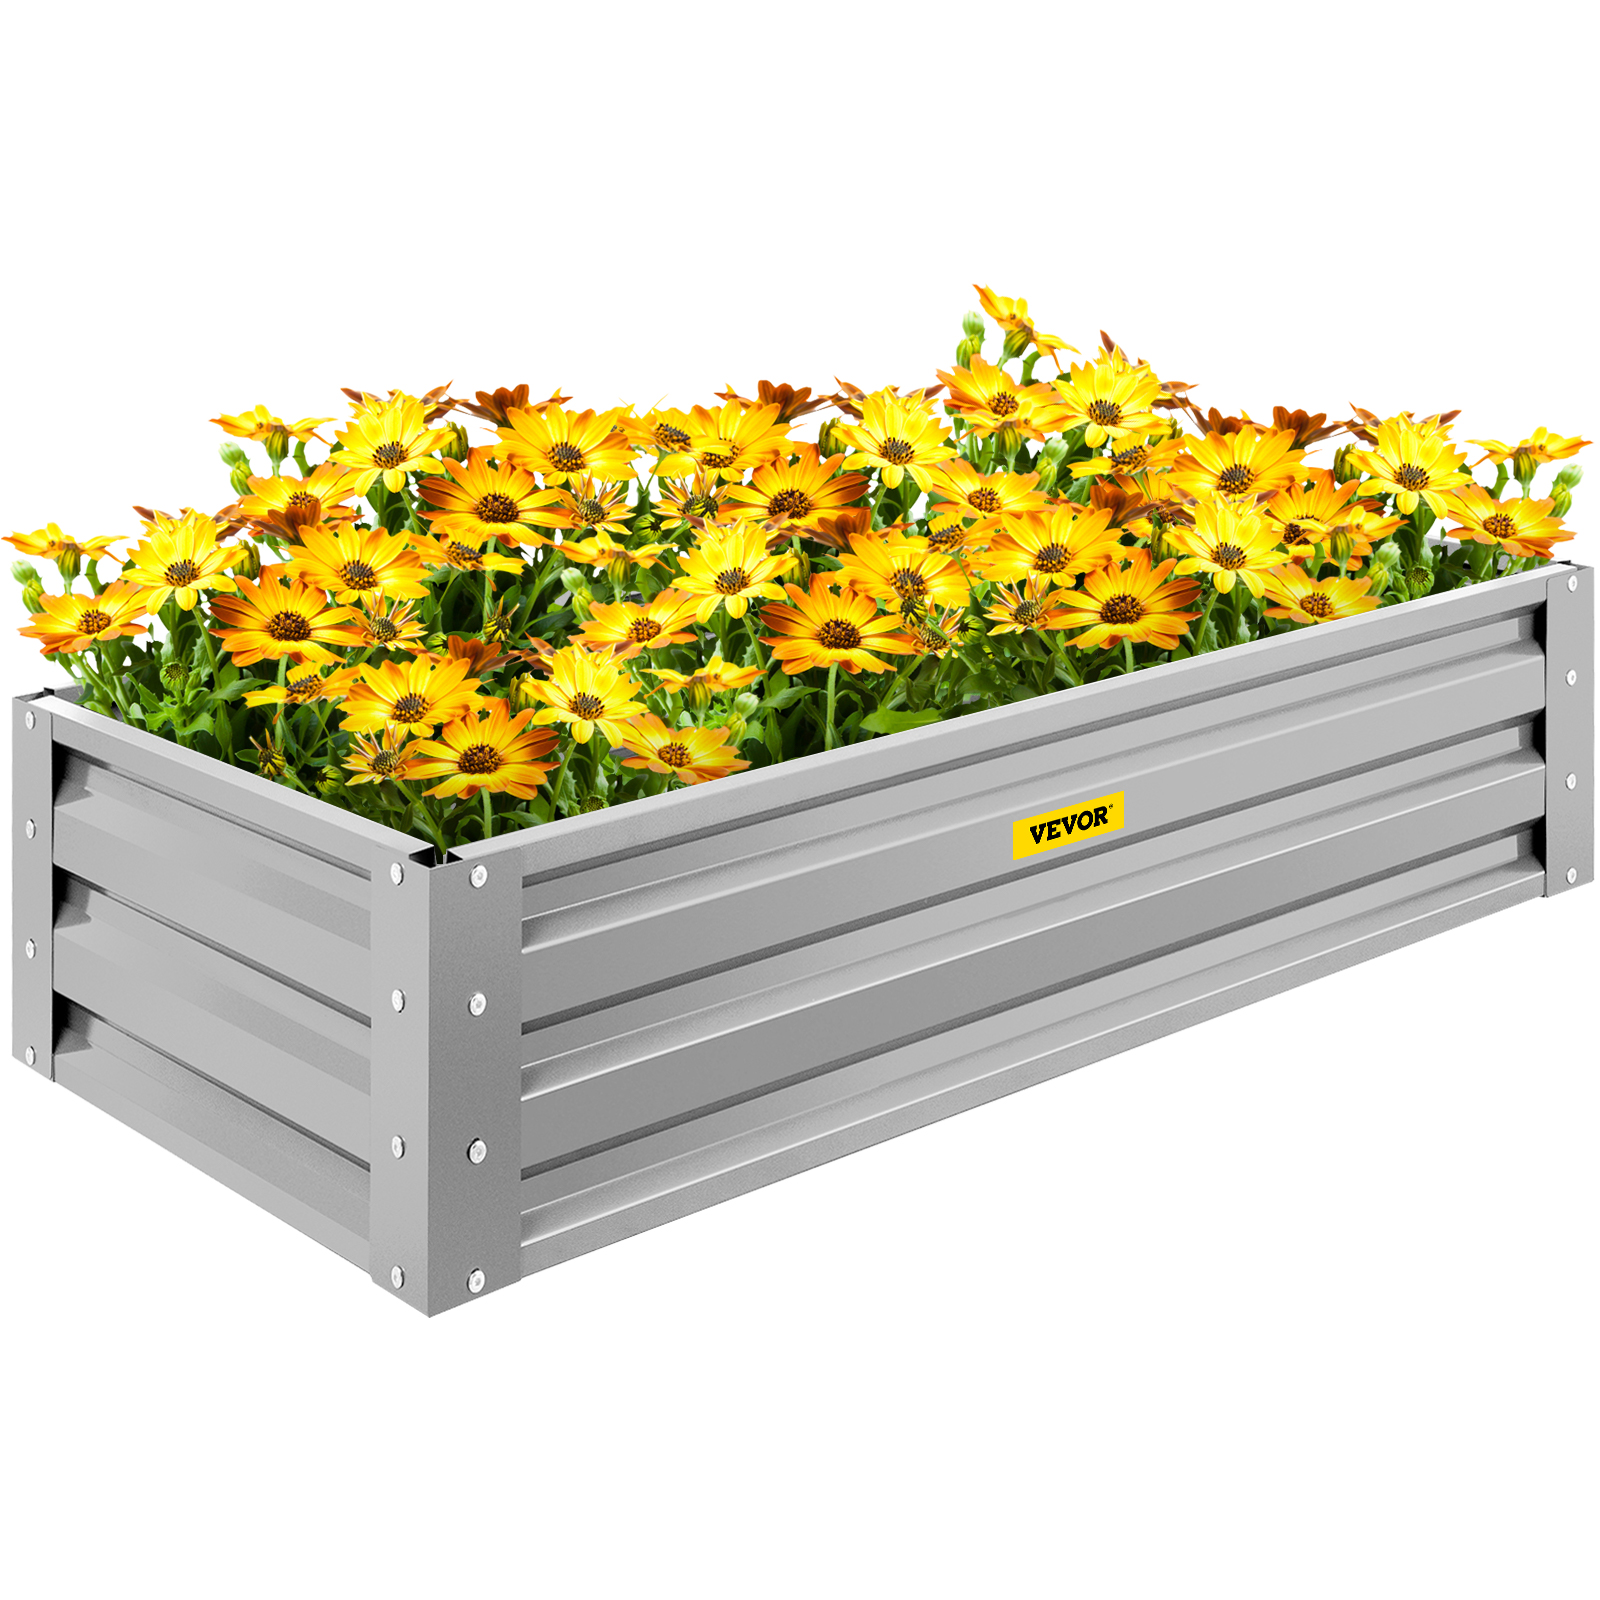 VEVOR Galvanized Raised Garden Bed Metal Planter Box Grow Vegetable Flower 48 in от Vevor Many GEOs